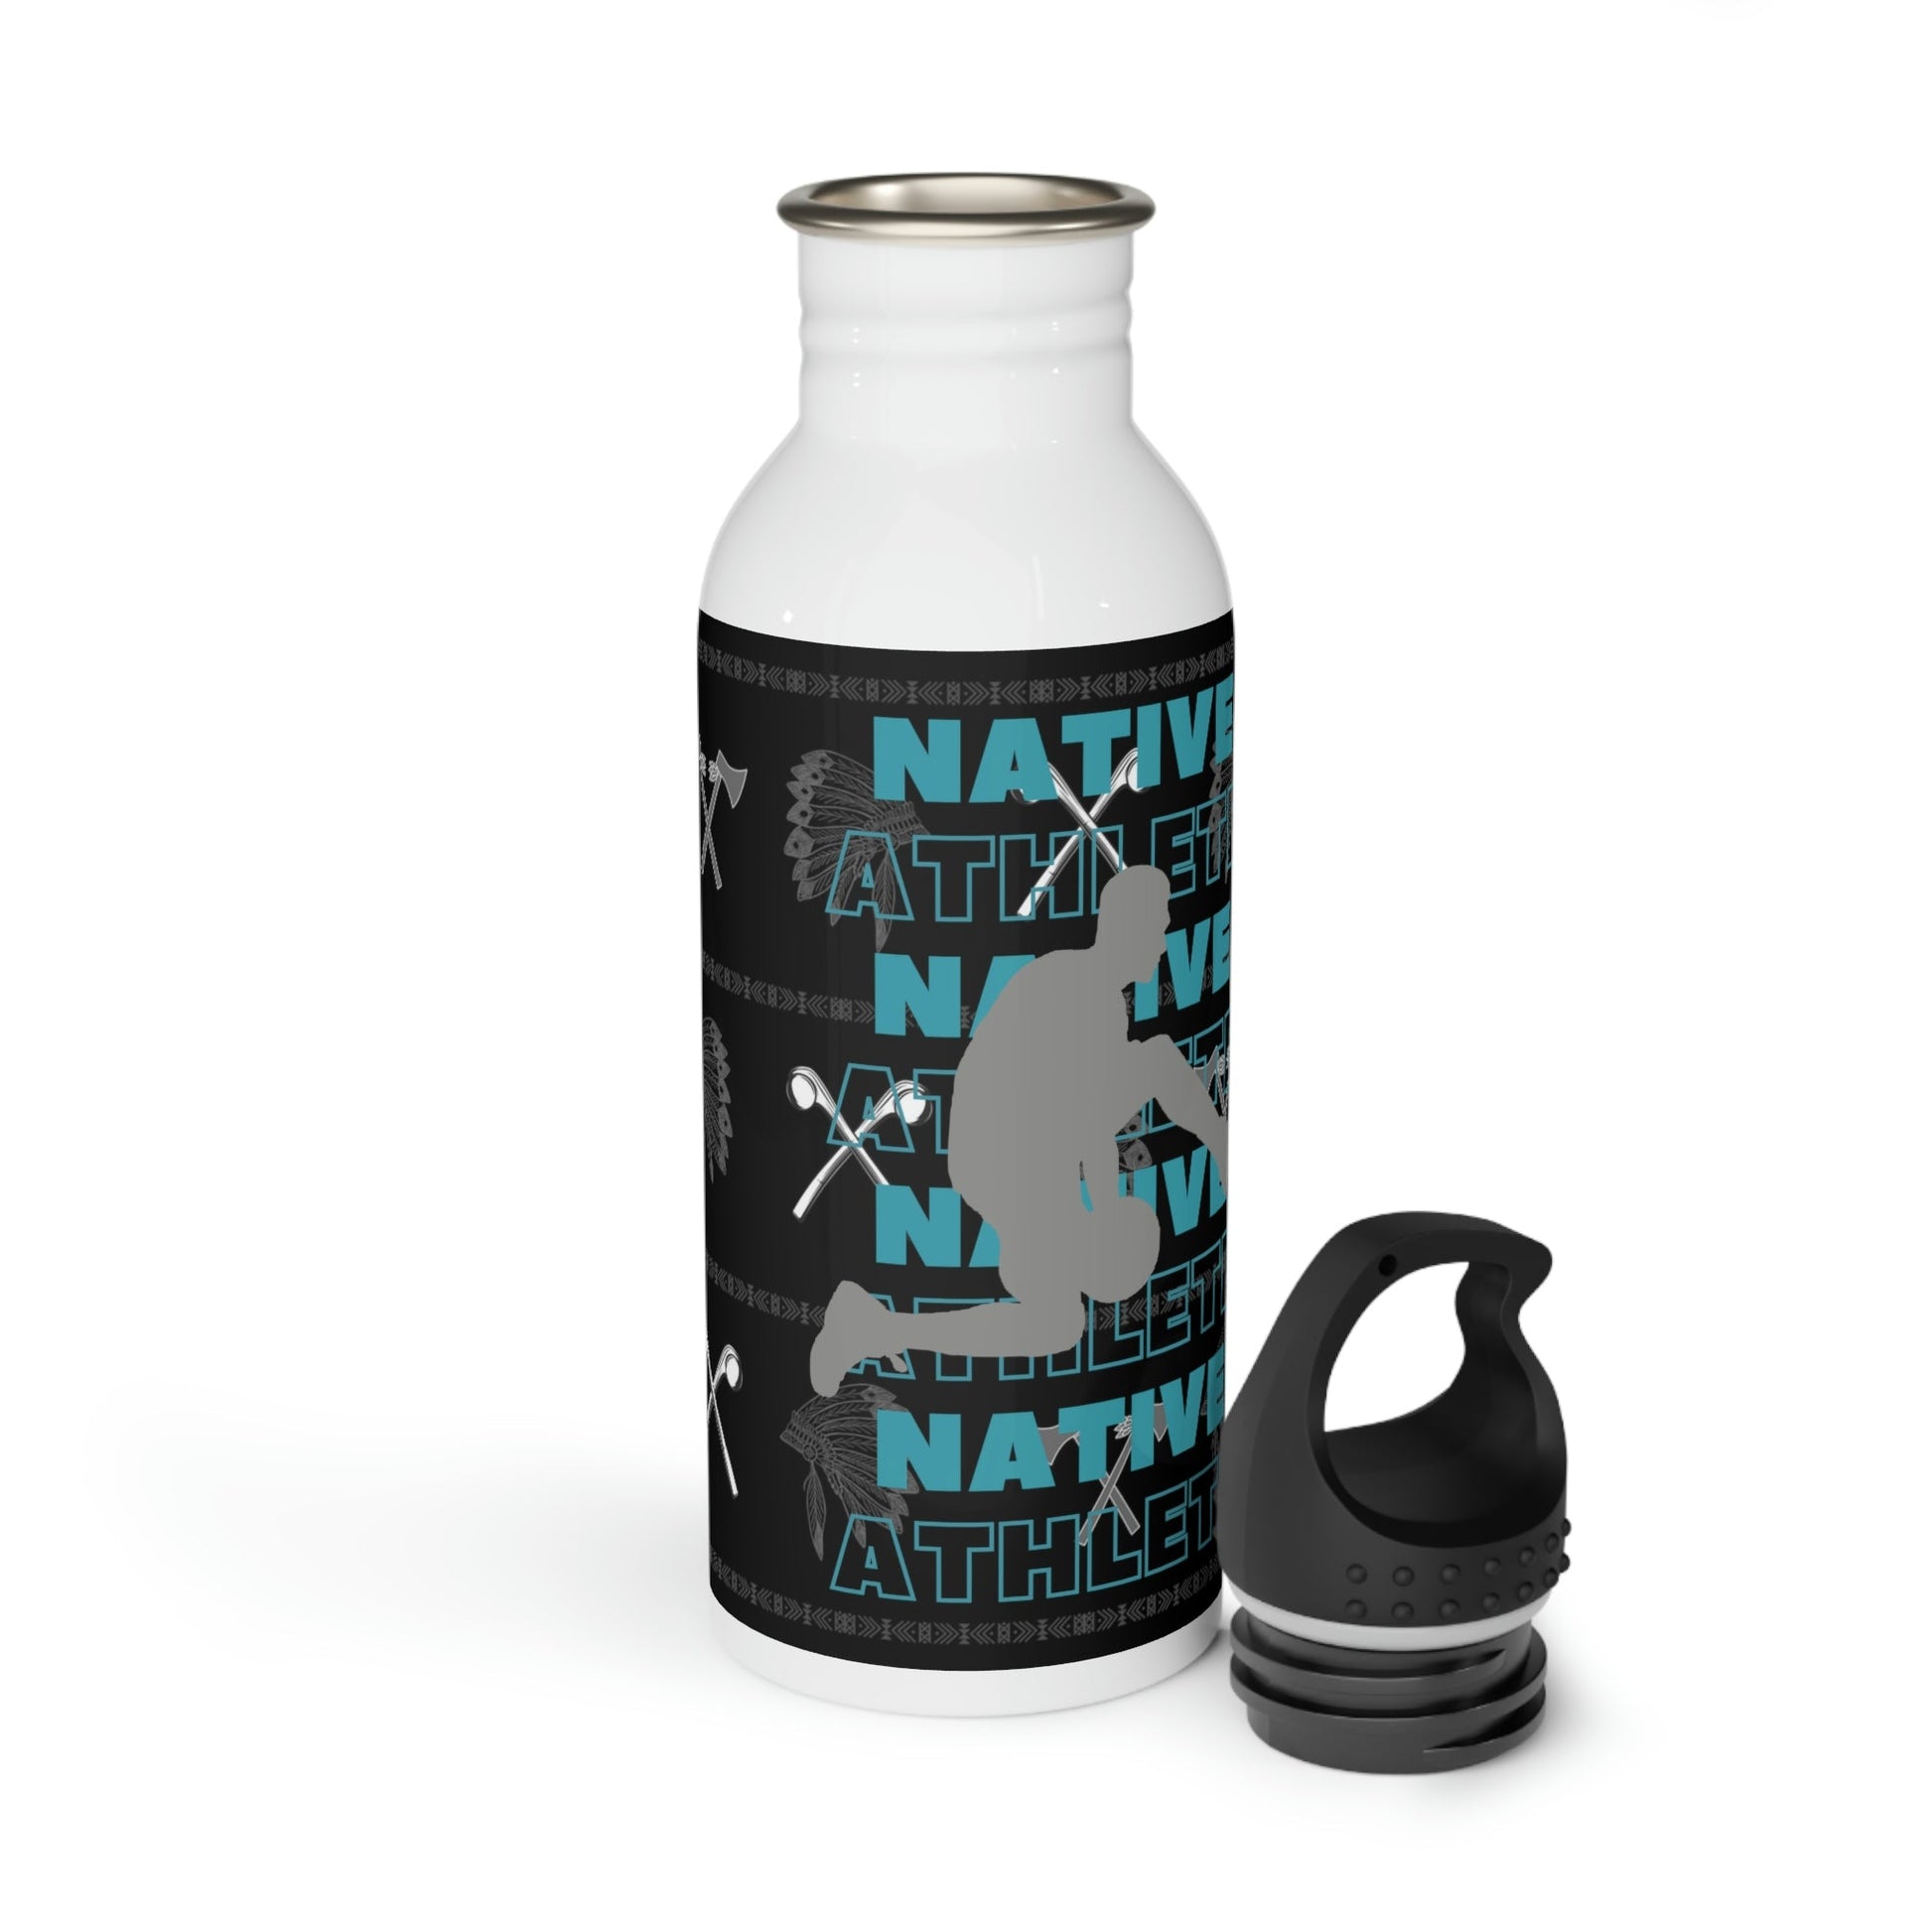 Native Athlete Stainless Steel Water Bottle - Nikikw Designs